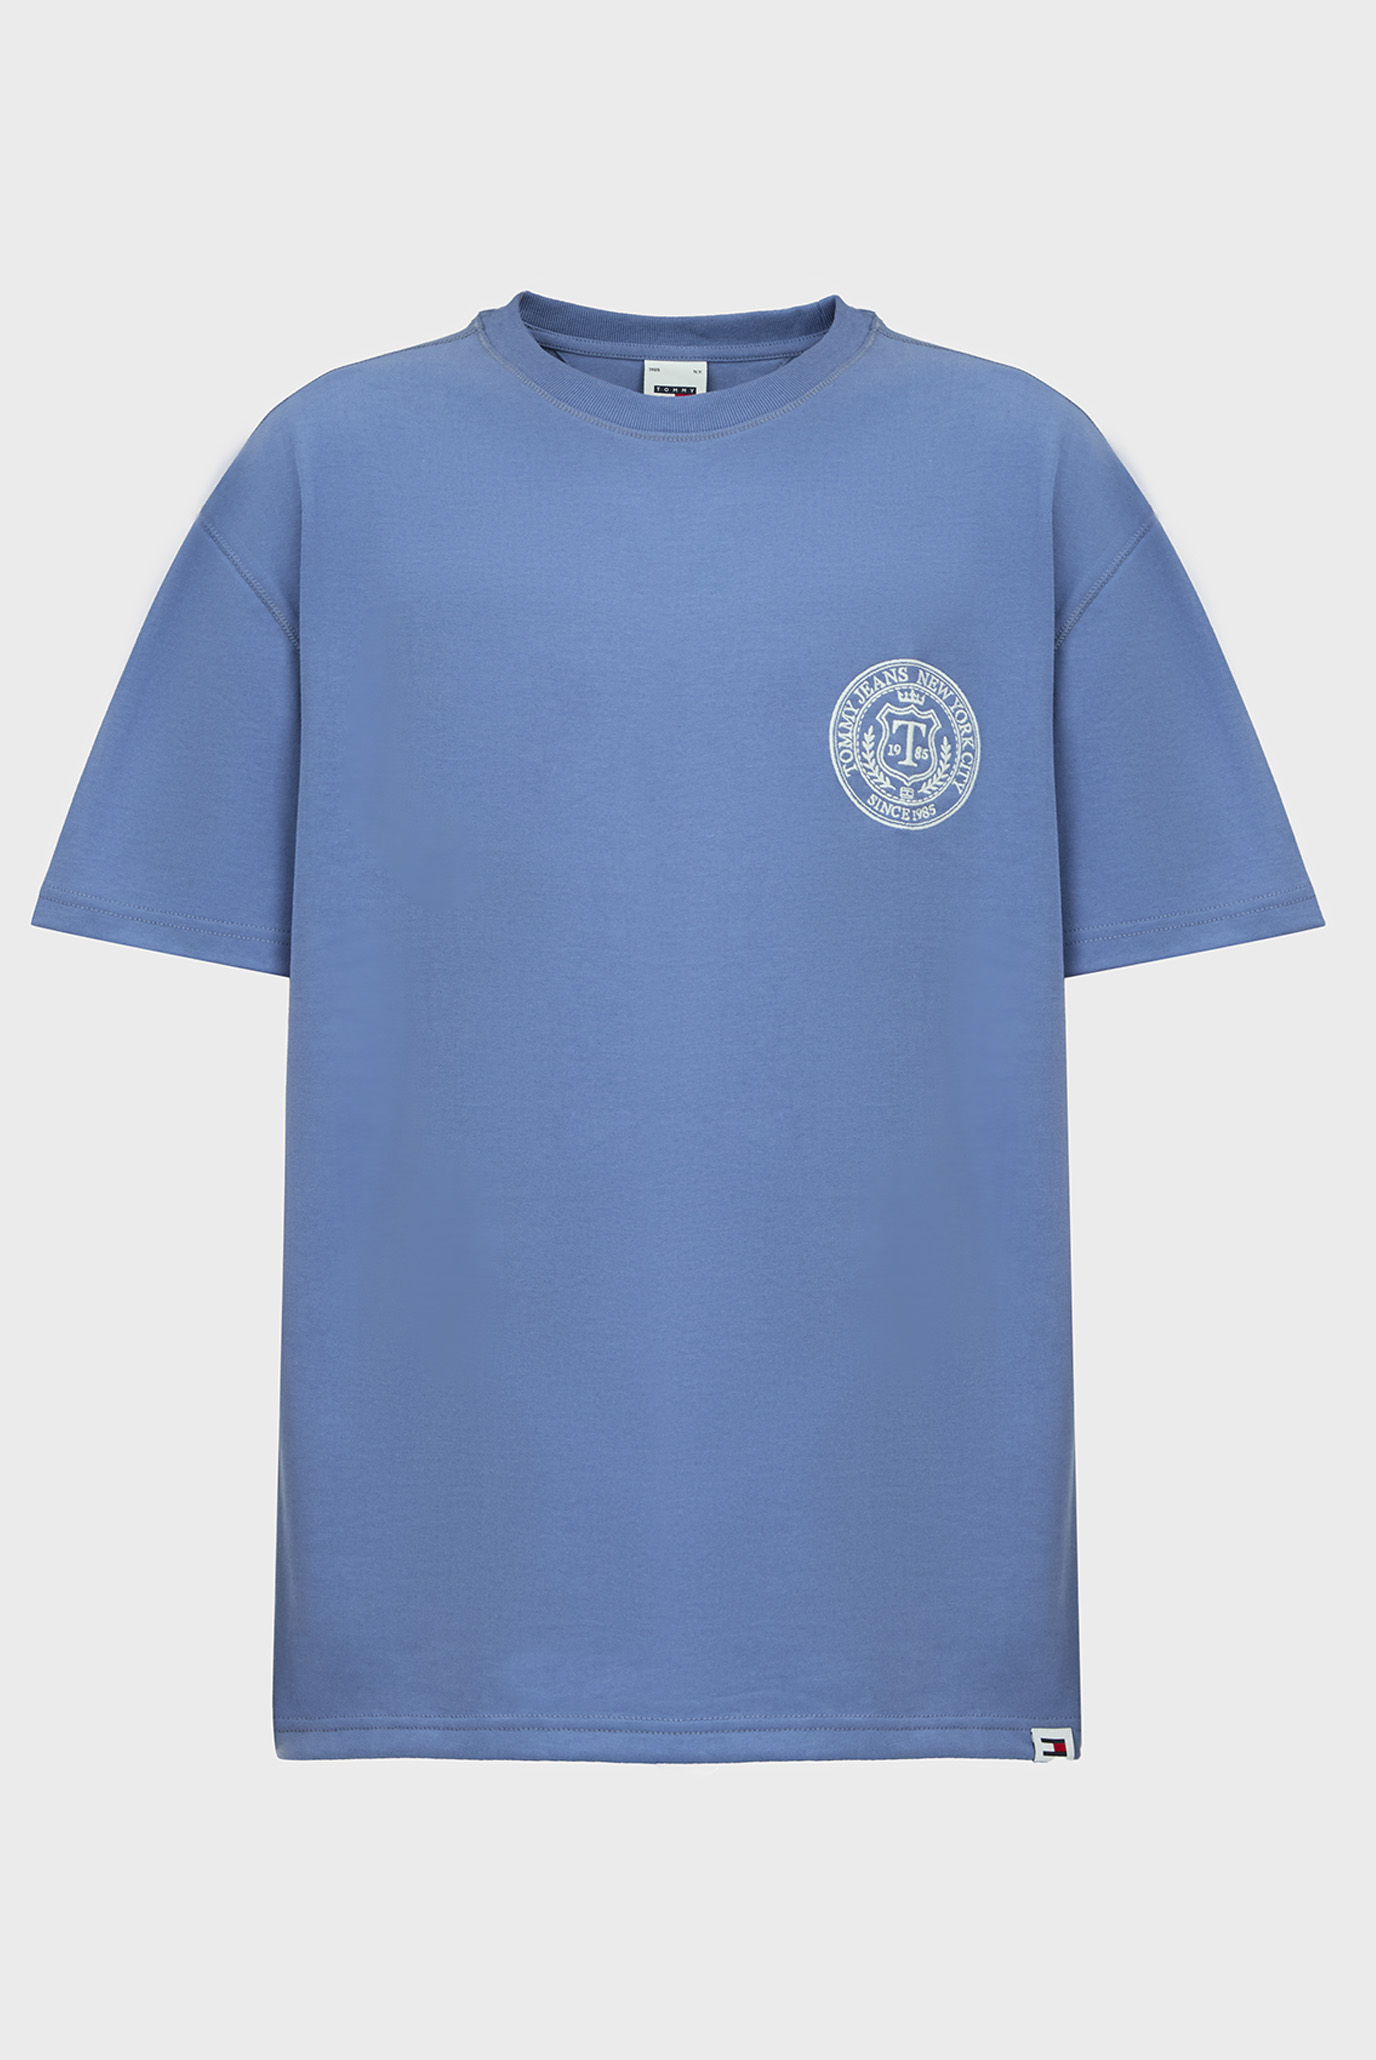 Мужская синяя футболка TJM REG PREP LUXE CREST TEE 1